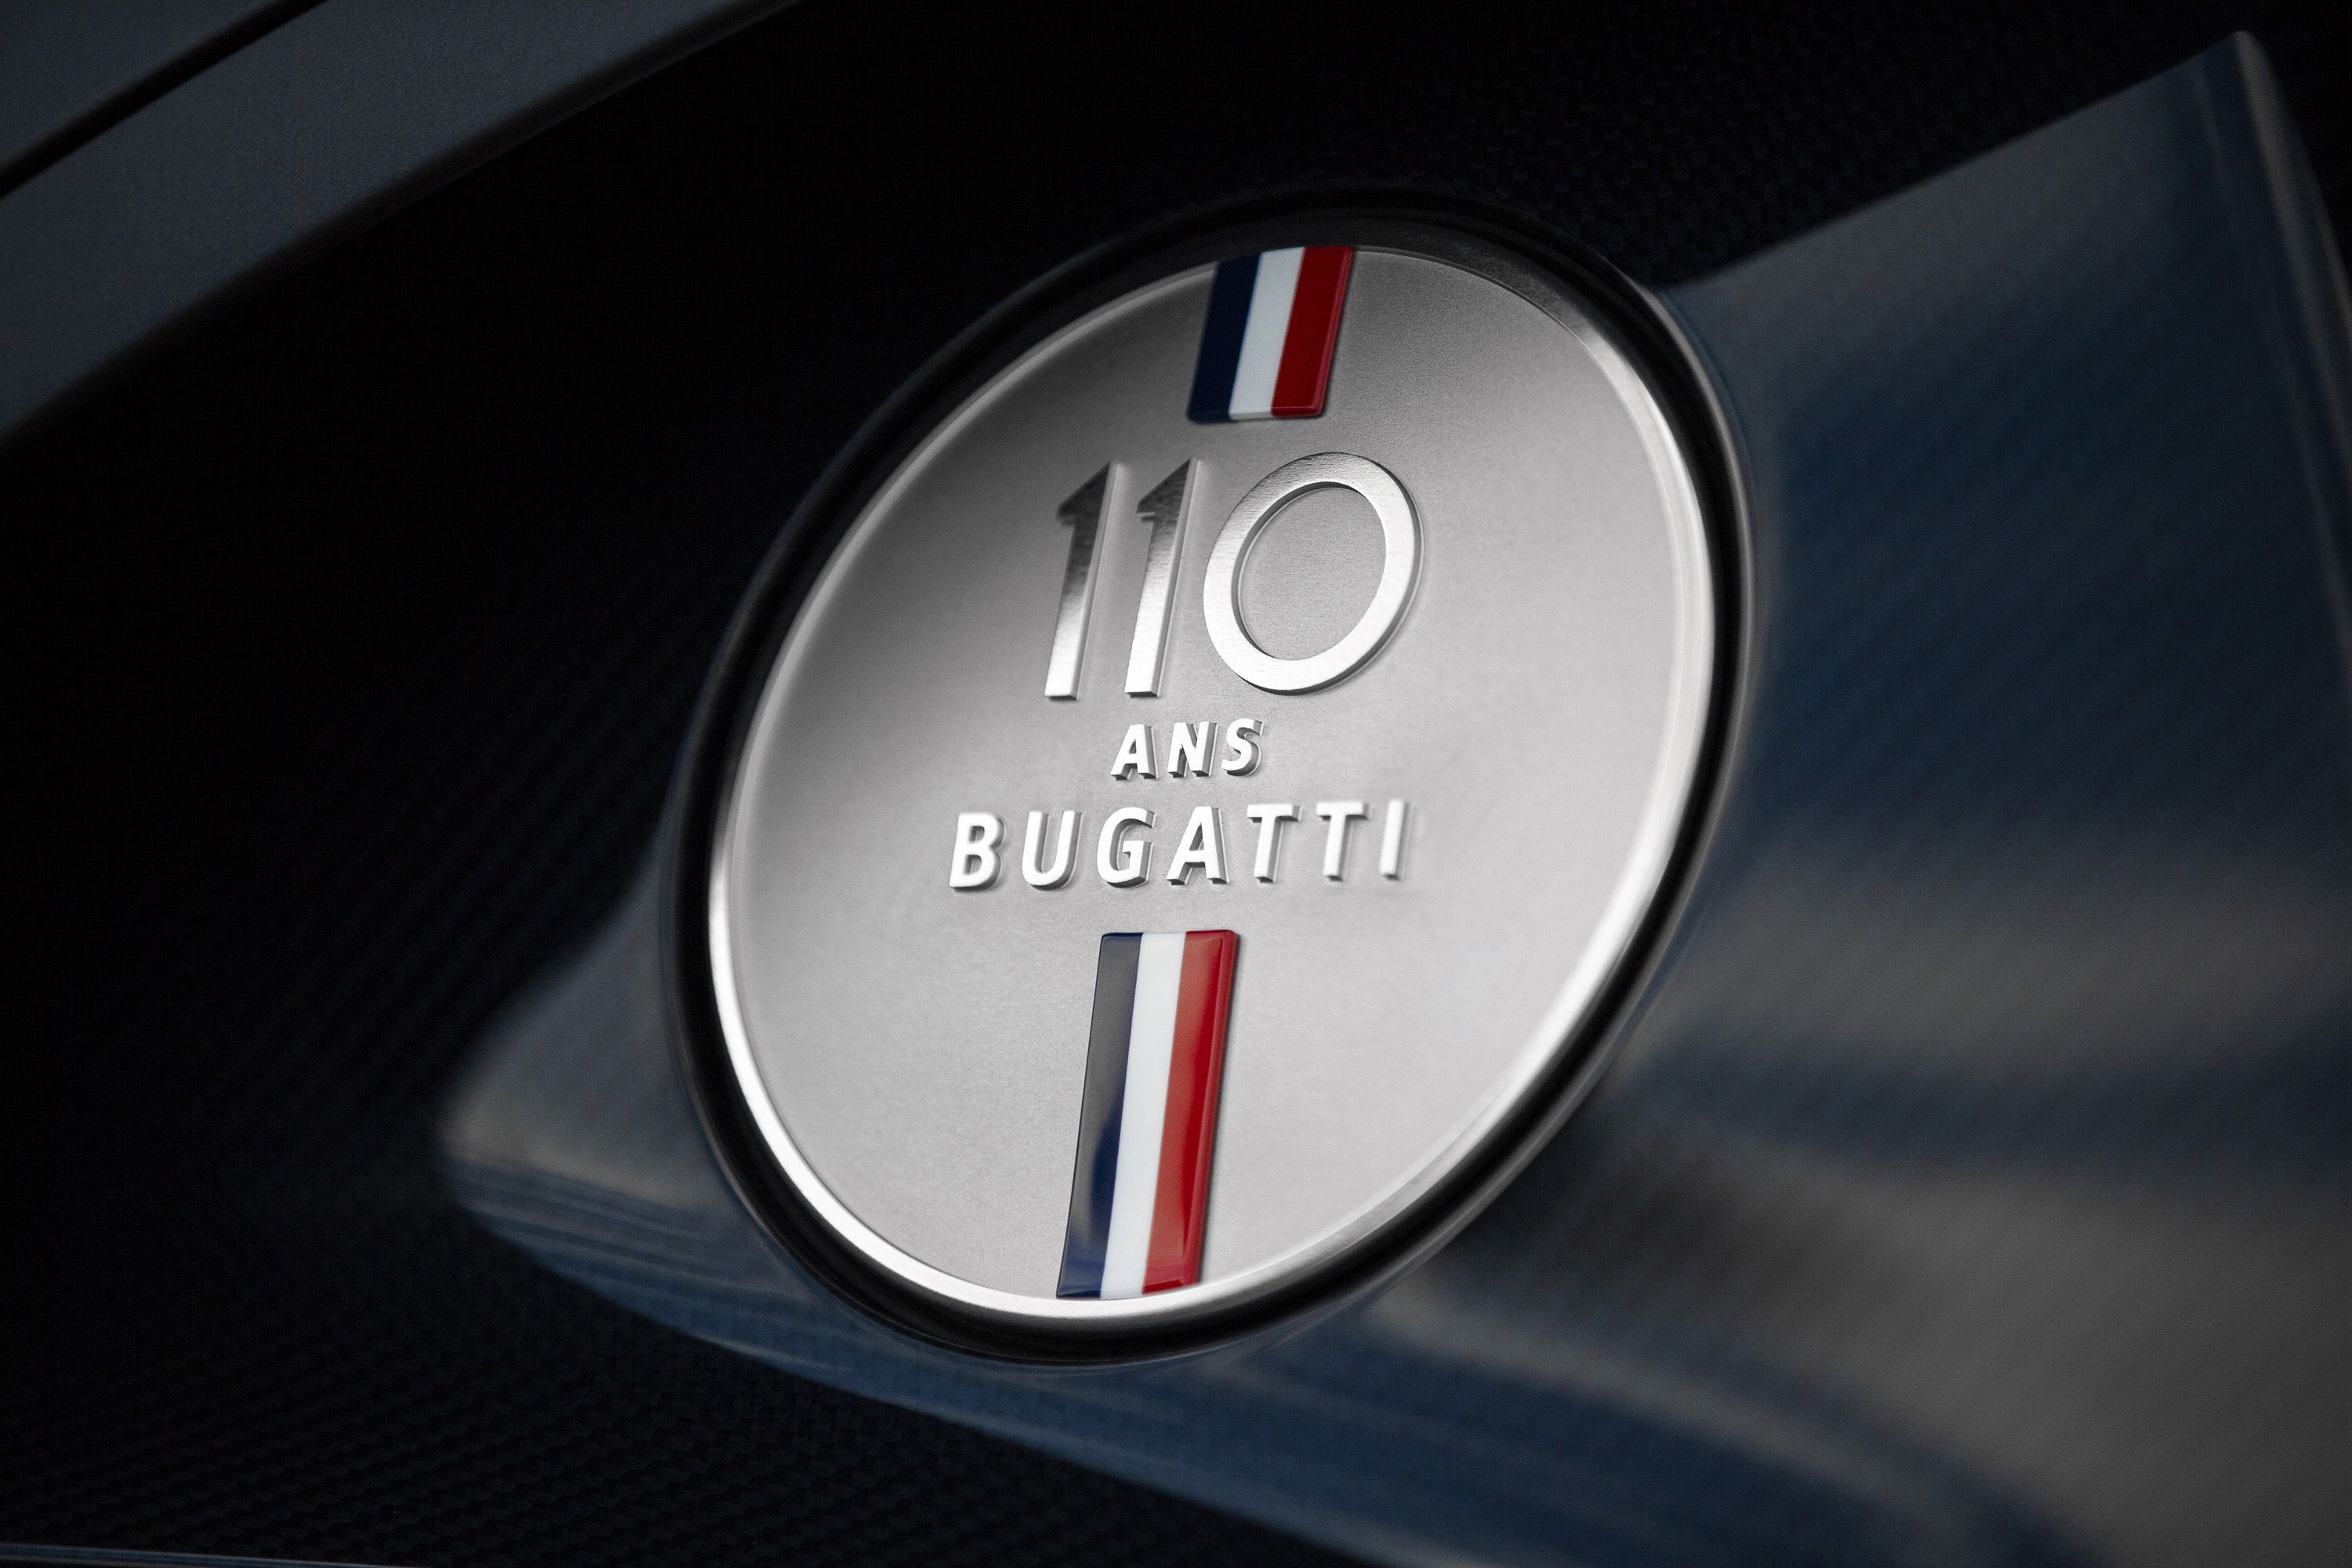 Bugatti Chiron Sport 110 Ans Bugatti Wallpaper (HD Image)